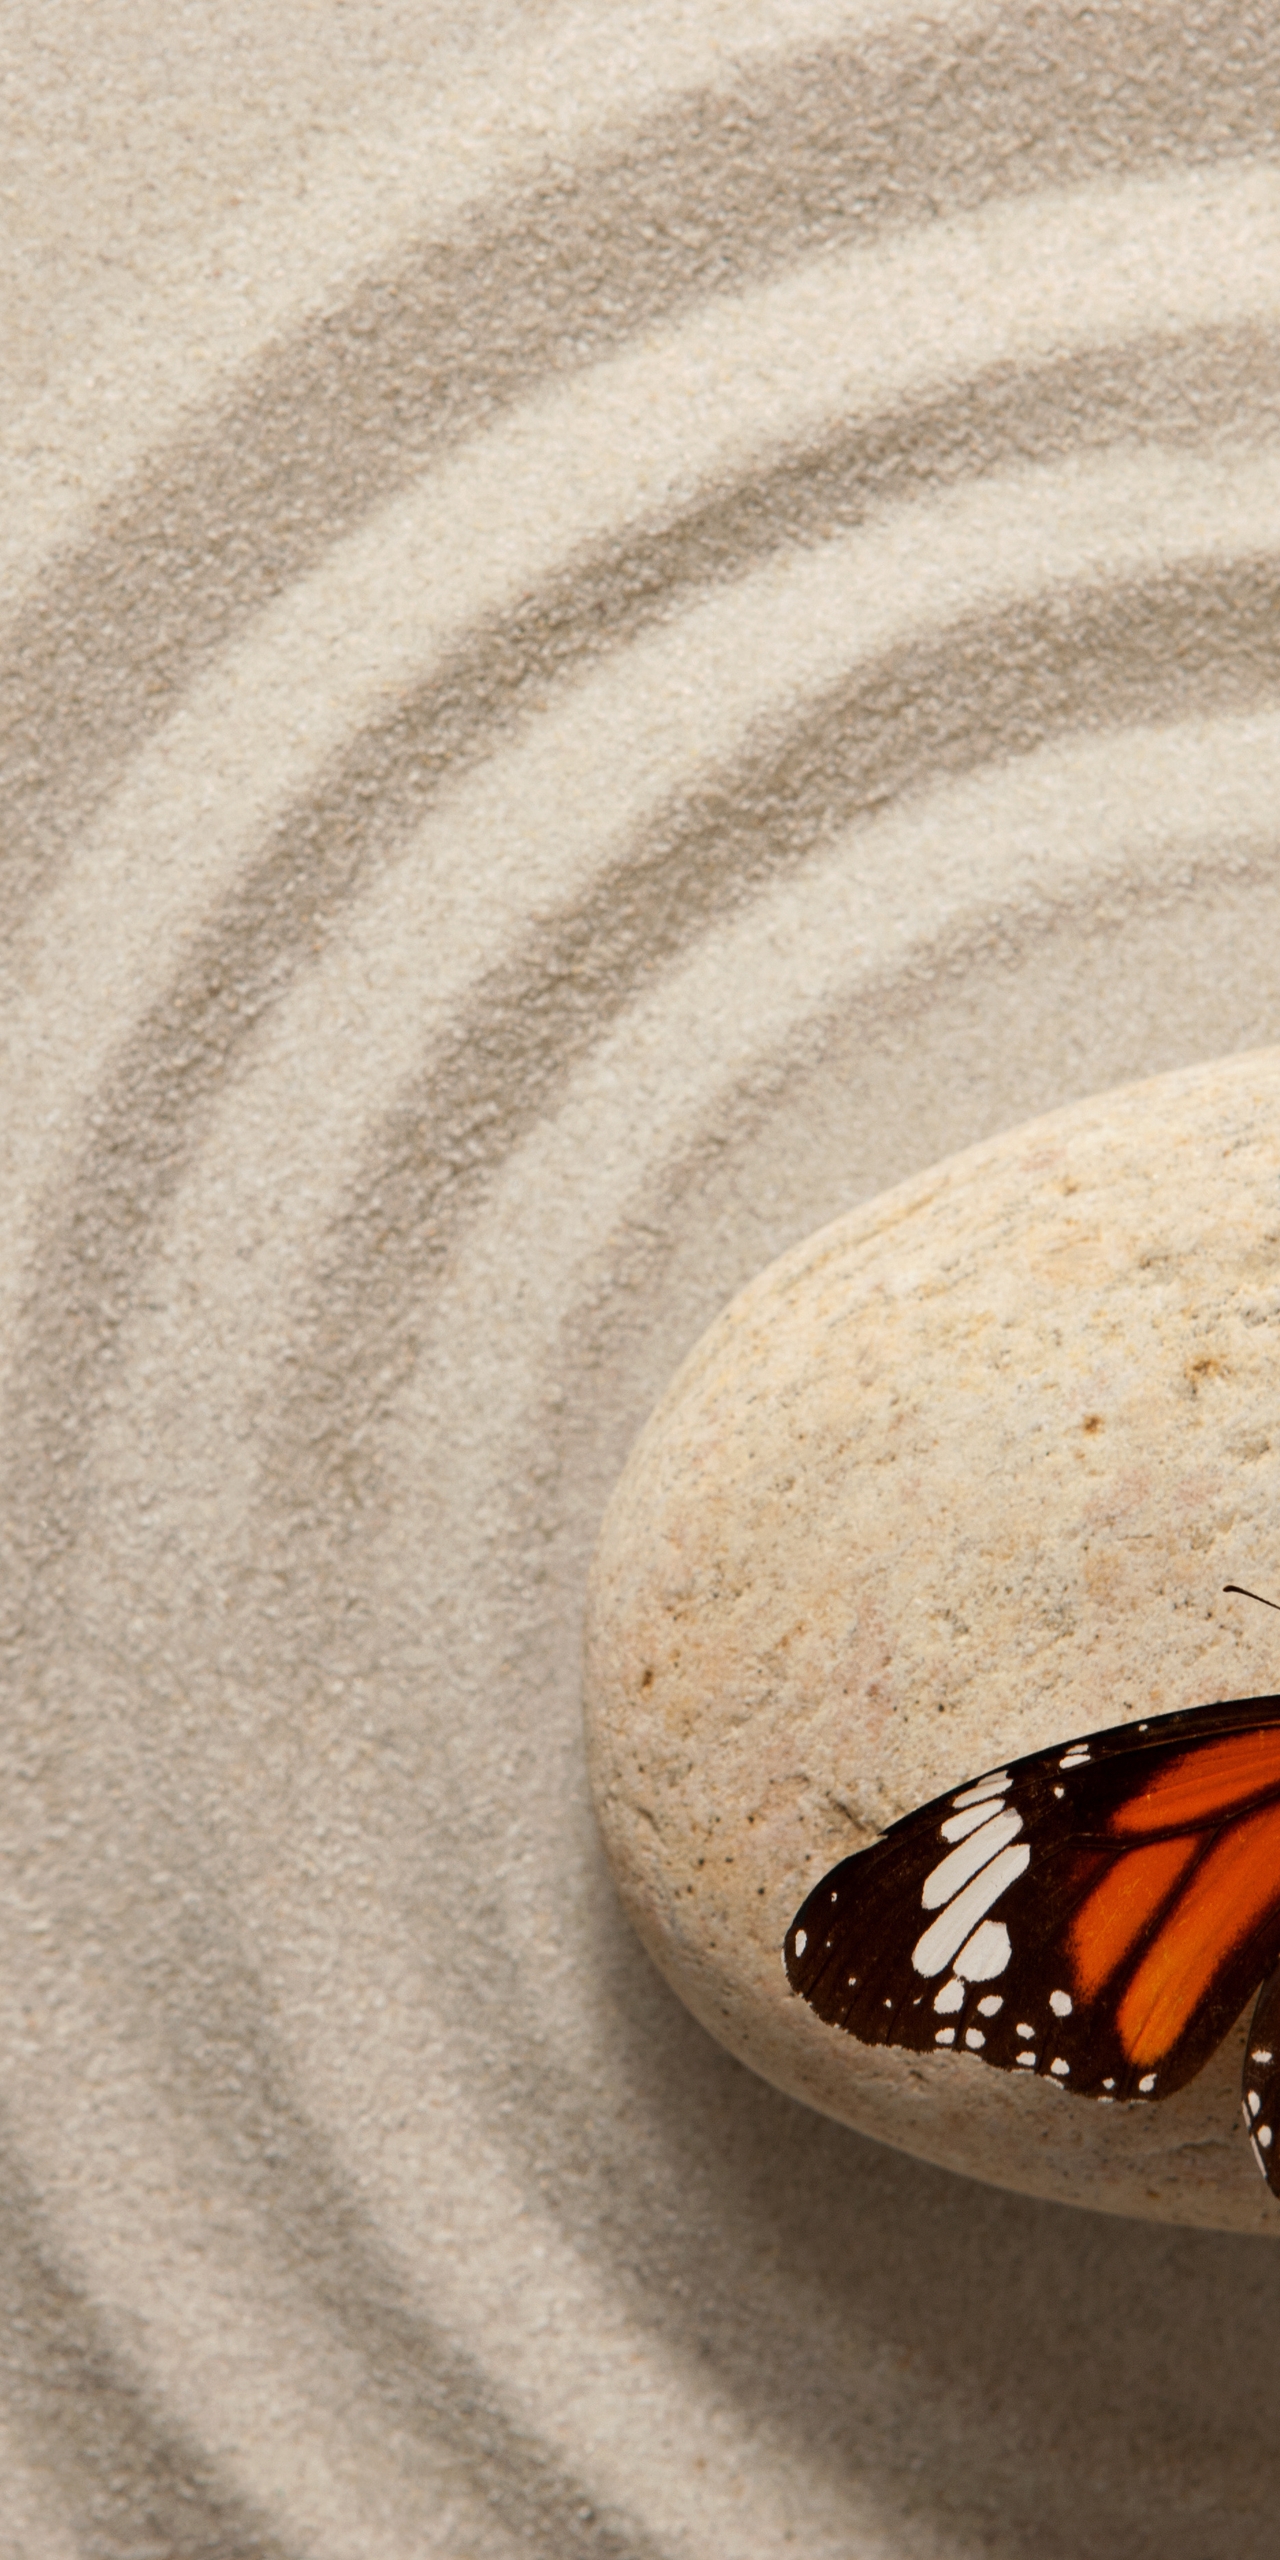 Картинка: Бабочка, крылья, окрас, камень, песок